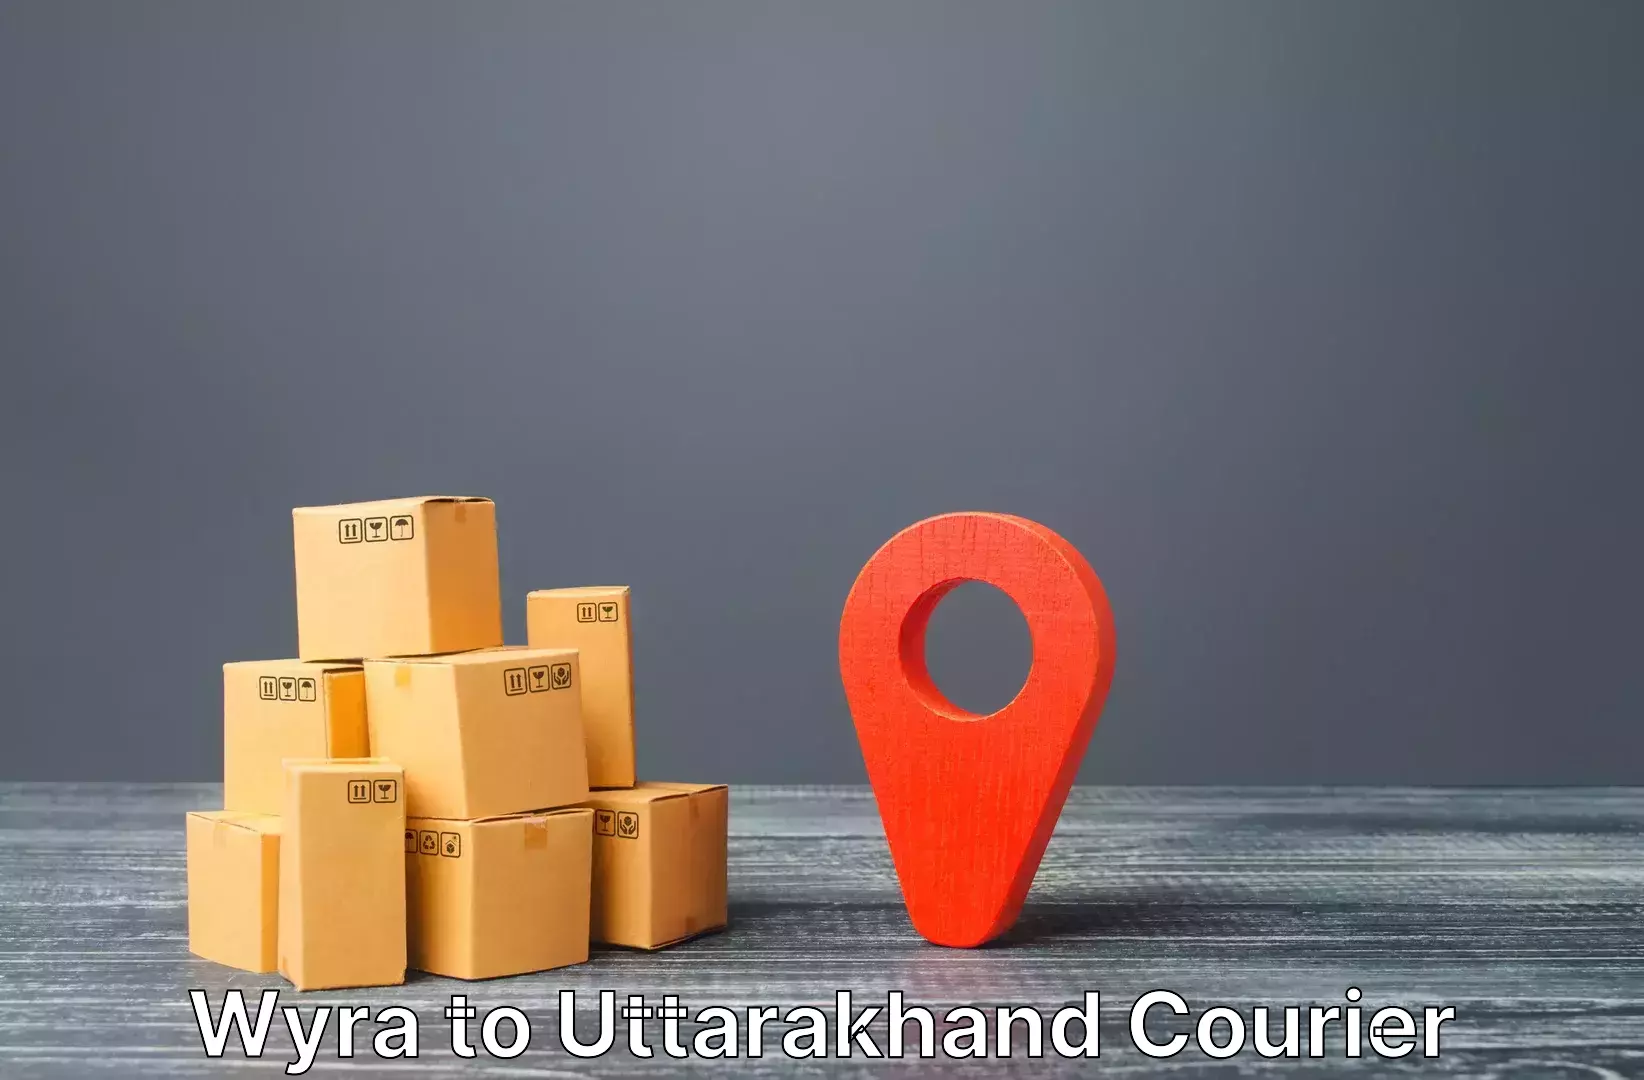 Emergency baggage service in Wyra to Uttarakhand